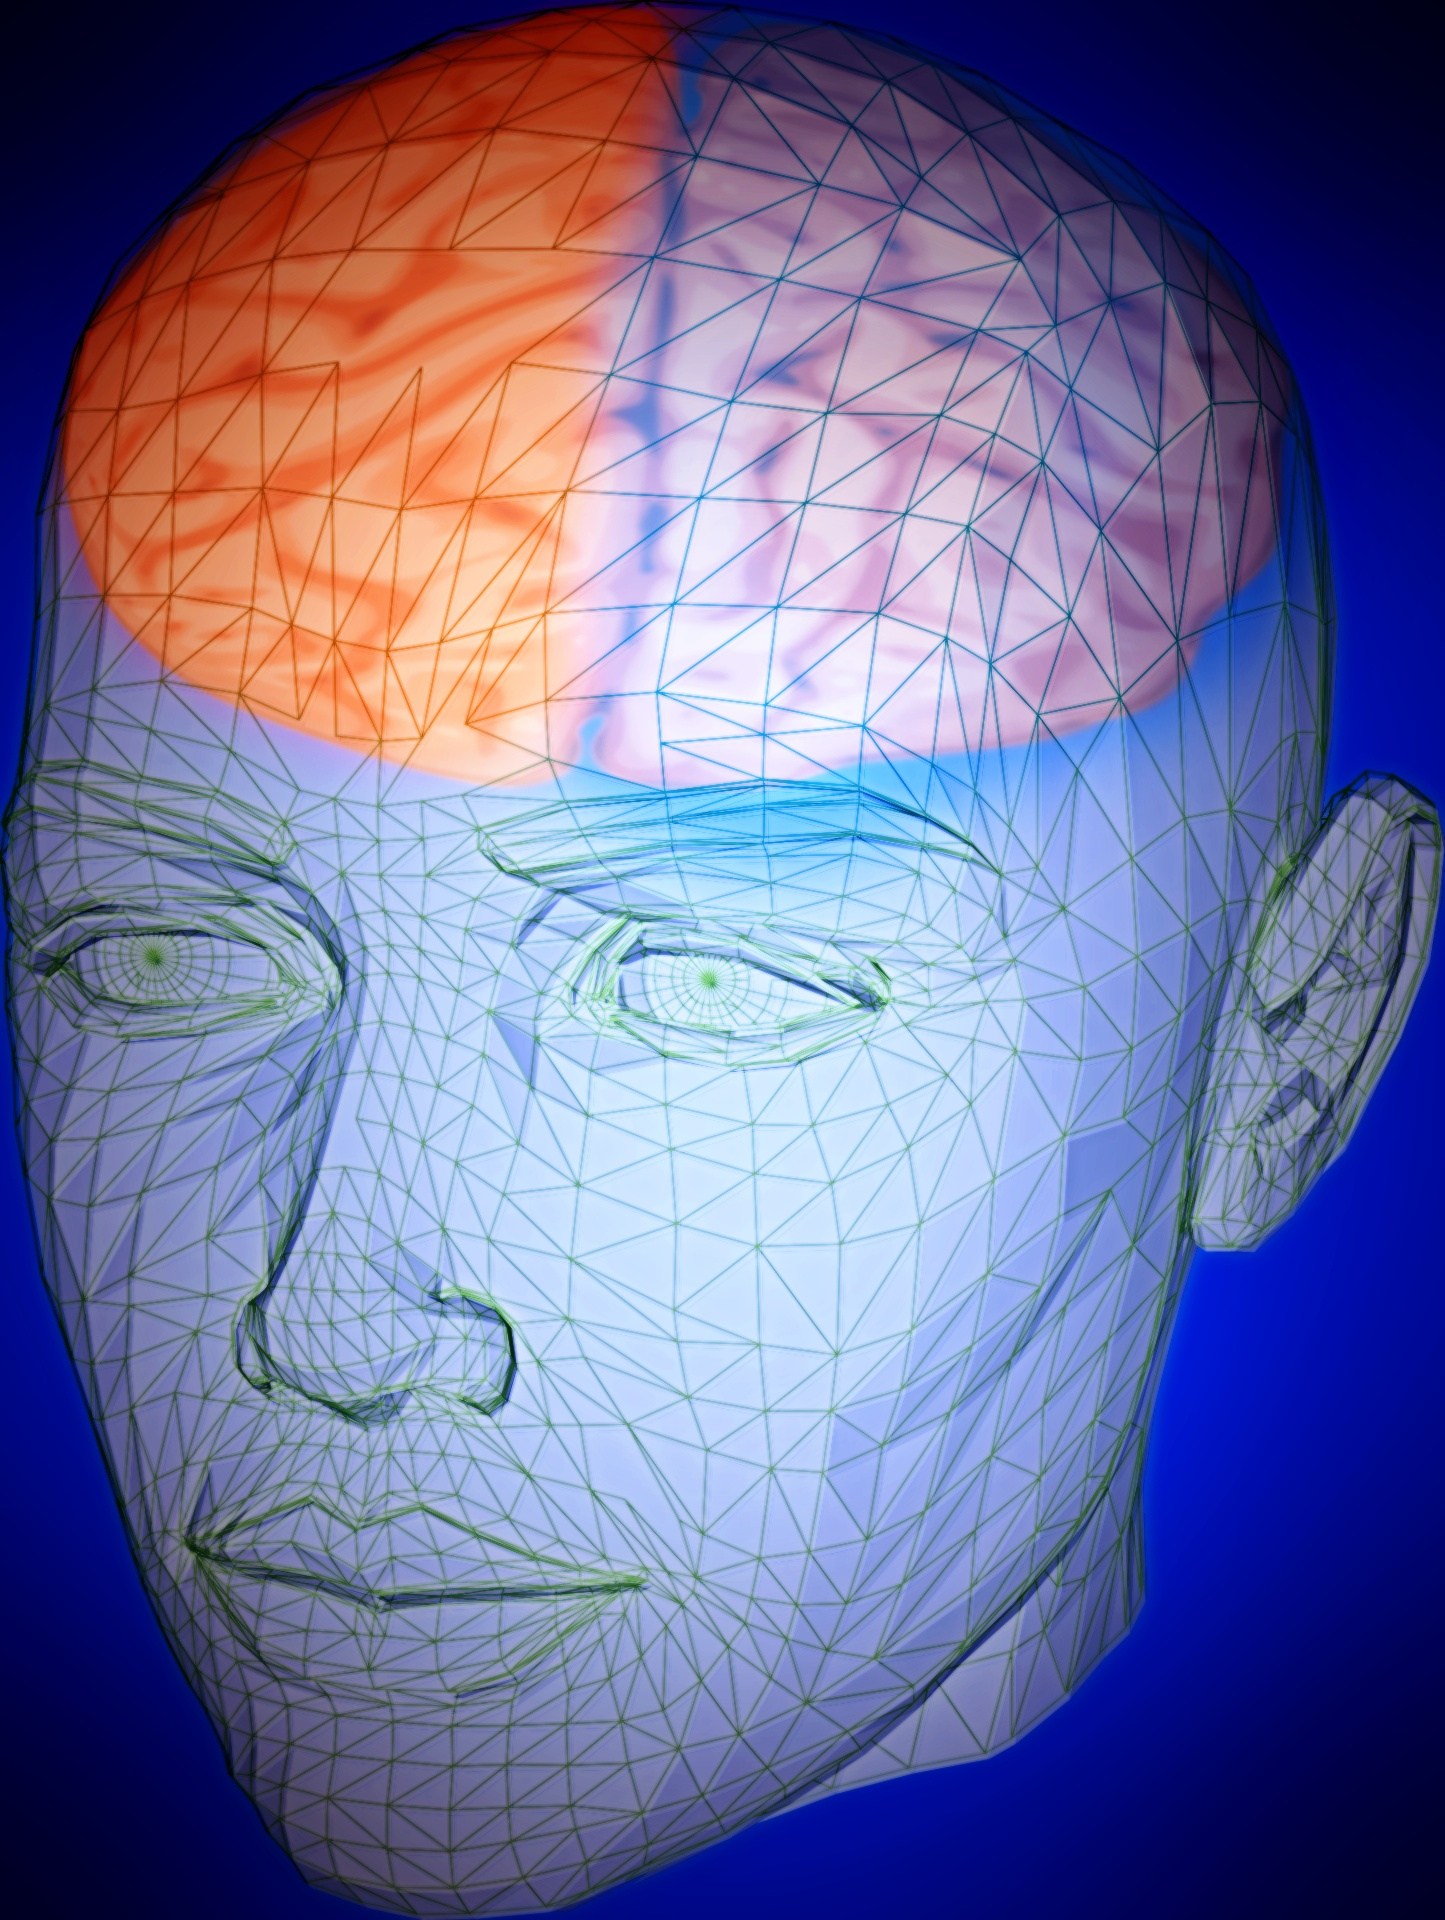 virtual-reality-heal-major-brain-disorders